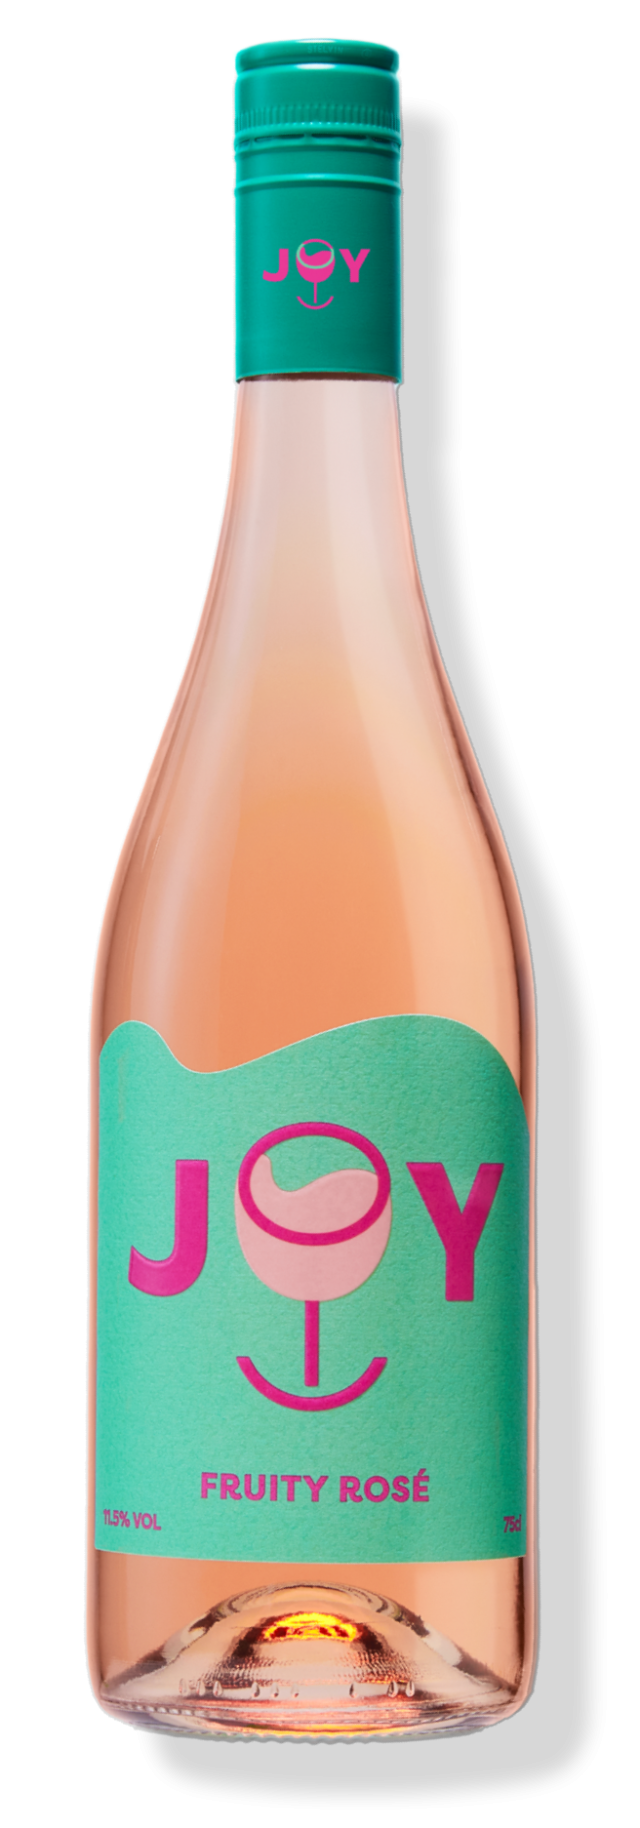 Joy Fruity Rosé.